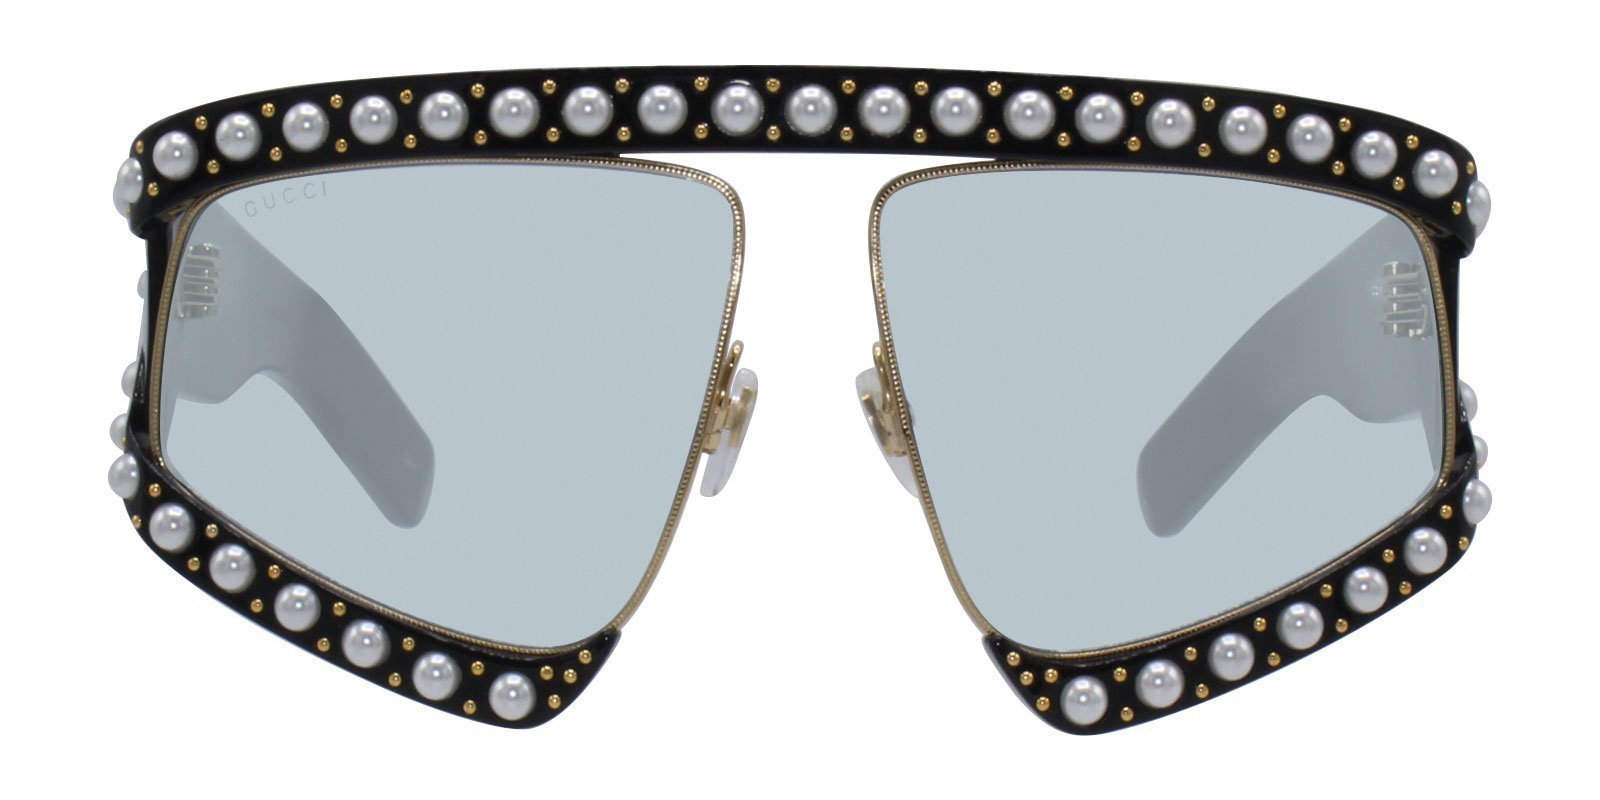 nickiminaj wears @louisvuitton golden mask sunglasses ($745) and a